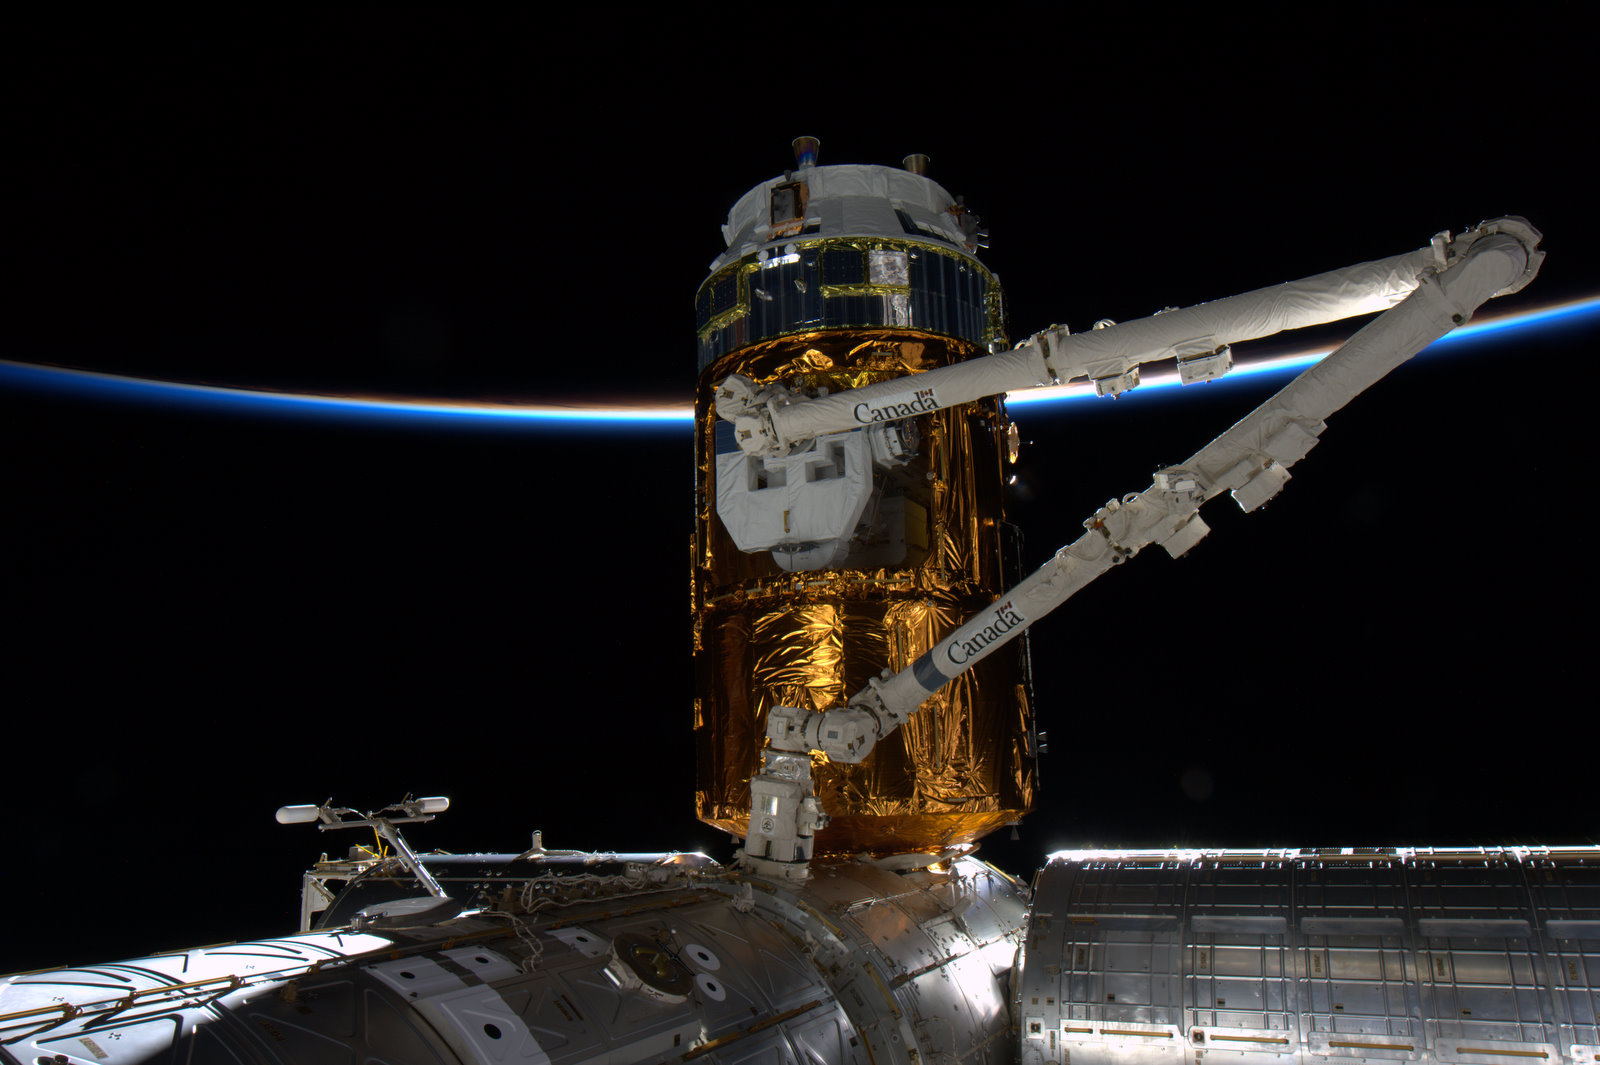 NASA photo ISS International Space Station JAXA Japanese Aerospace Exploration Agency HTV posted on AmericaSpace